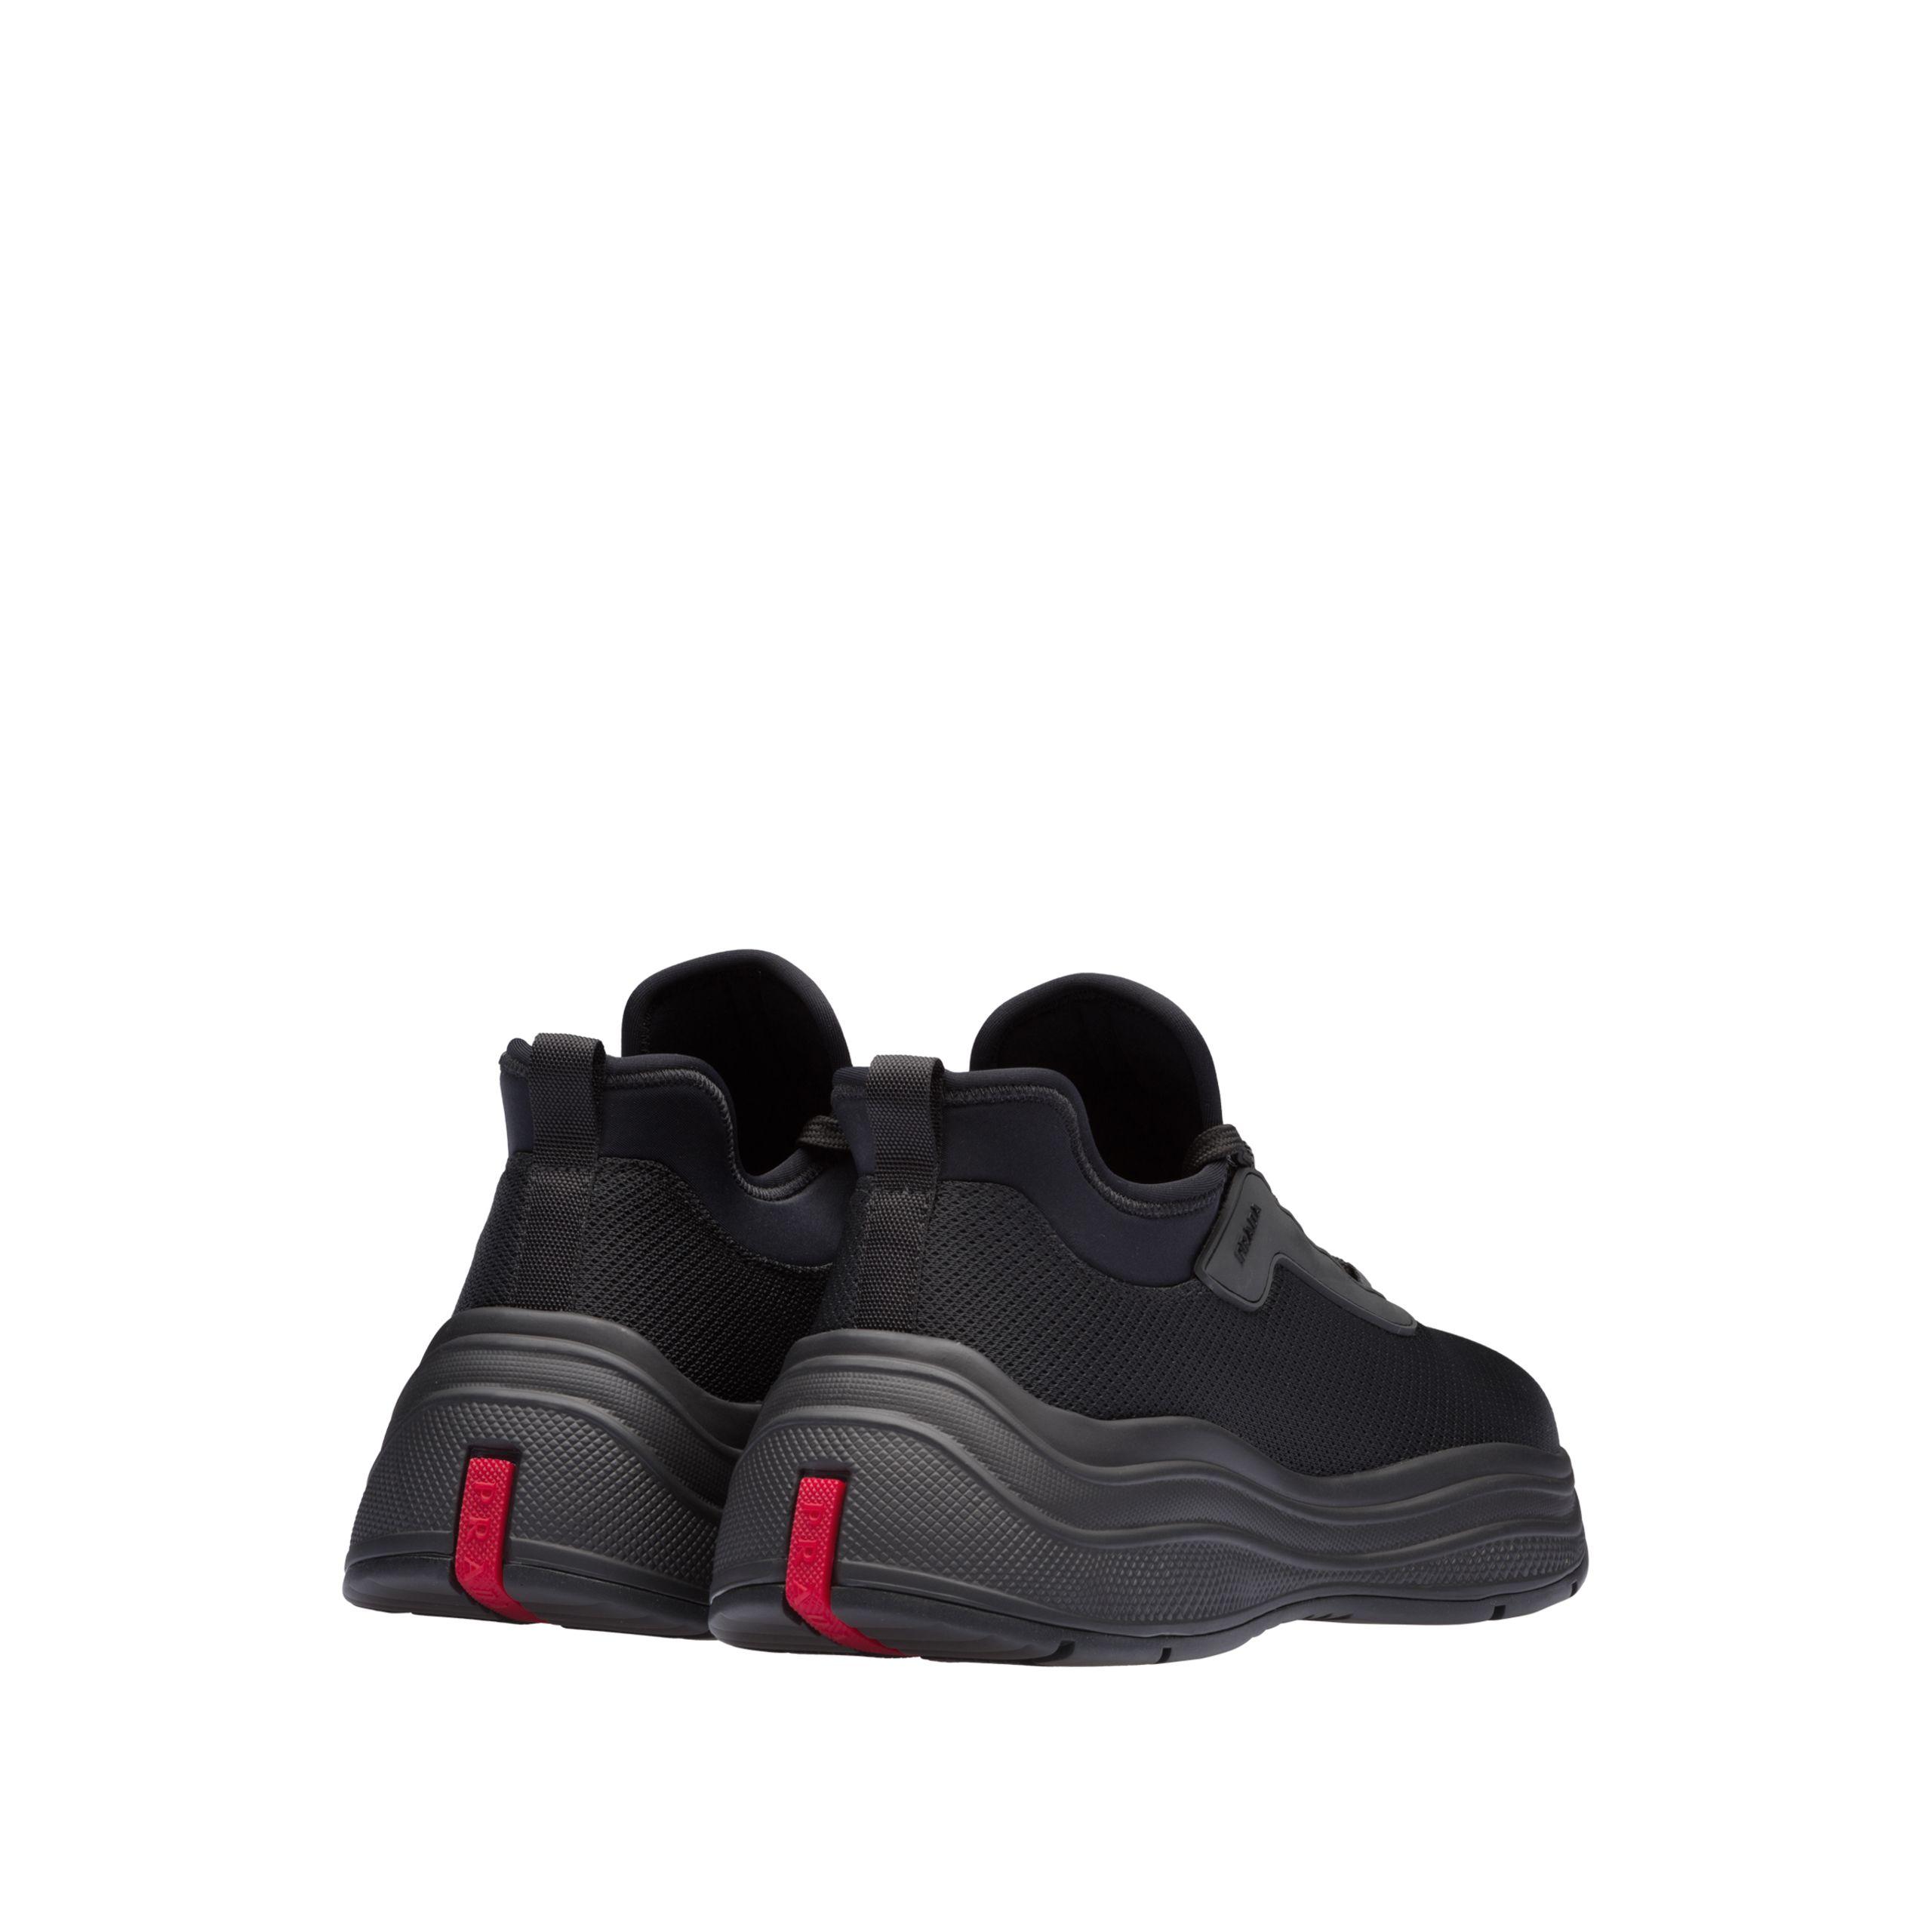 Prada Neoprene Mesh Panel Sneakers in Black for Men - Save 16% - Lyst